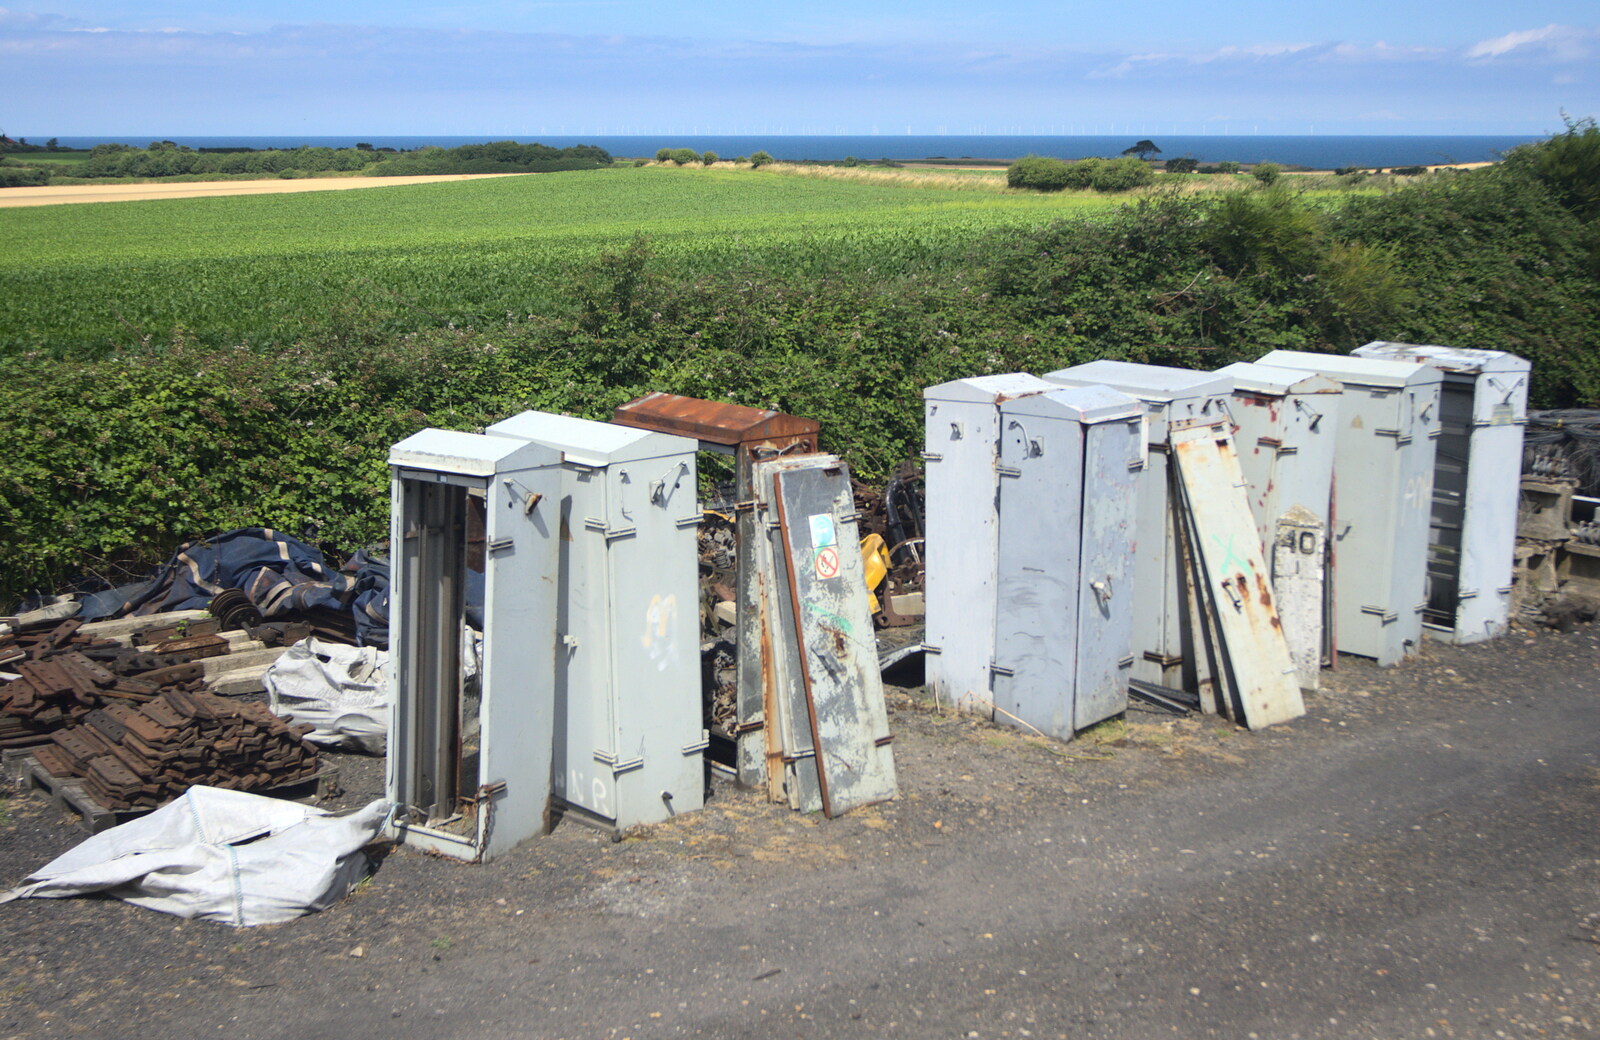 Derelict junction boxes at Weybourne from Sheringham Steam, Sheringham, North Norfolk - 31st July 2016